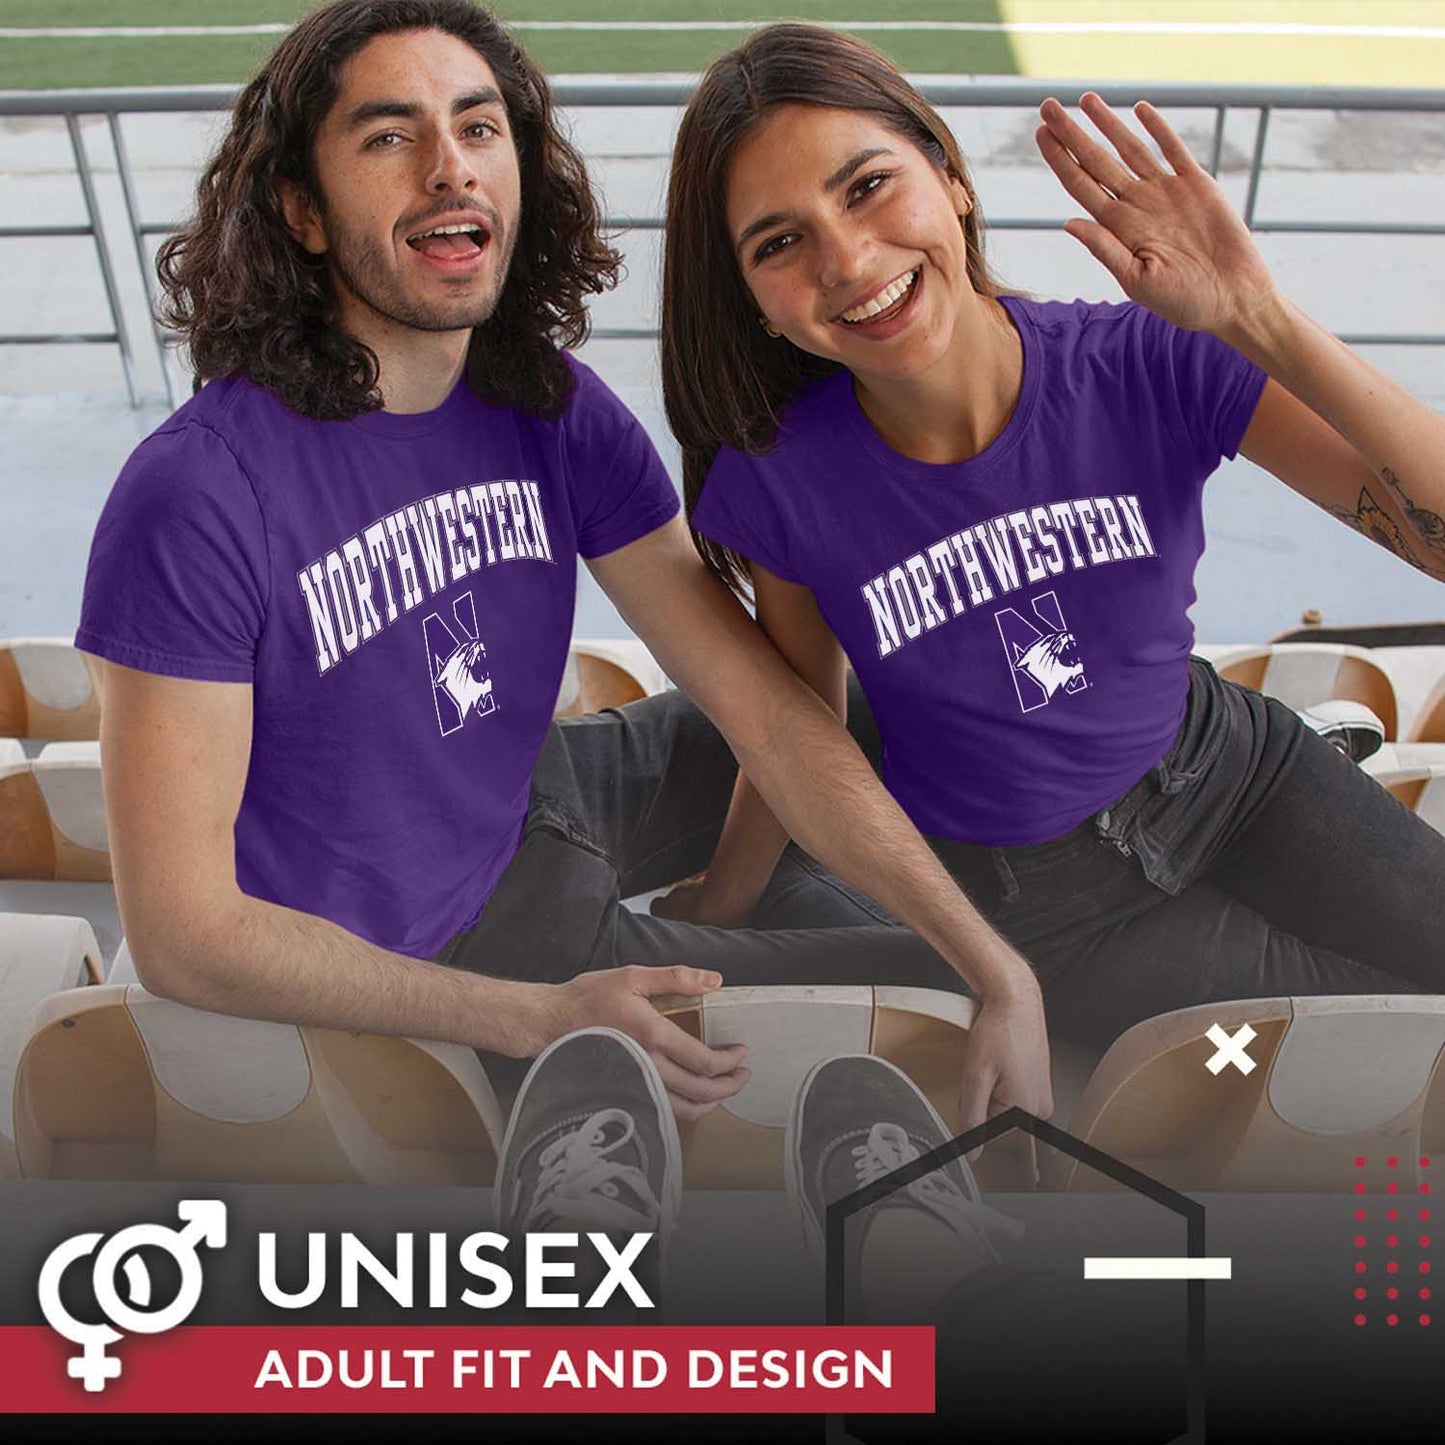 Northwestern Wildcats NCAA Adult Gameday Cotton T-Shirt - Purple